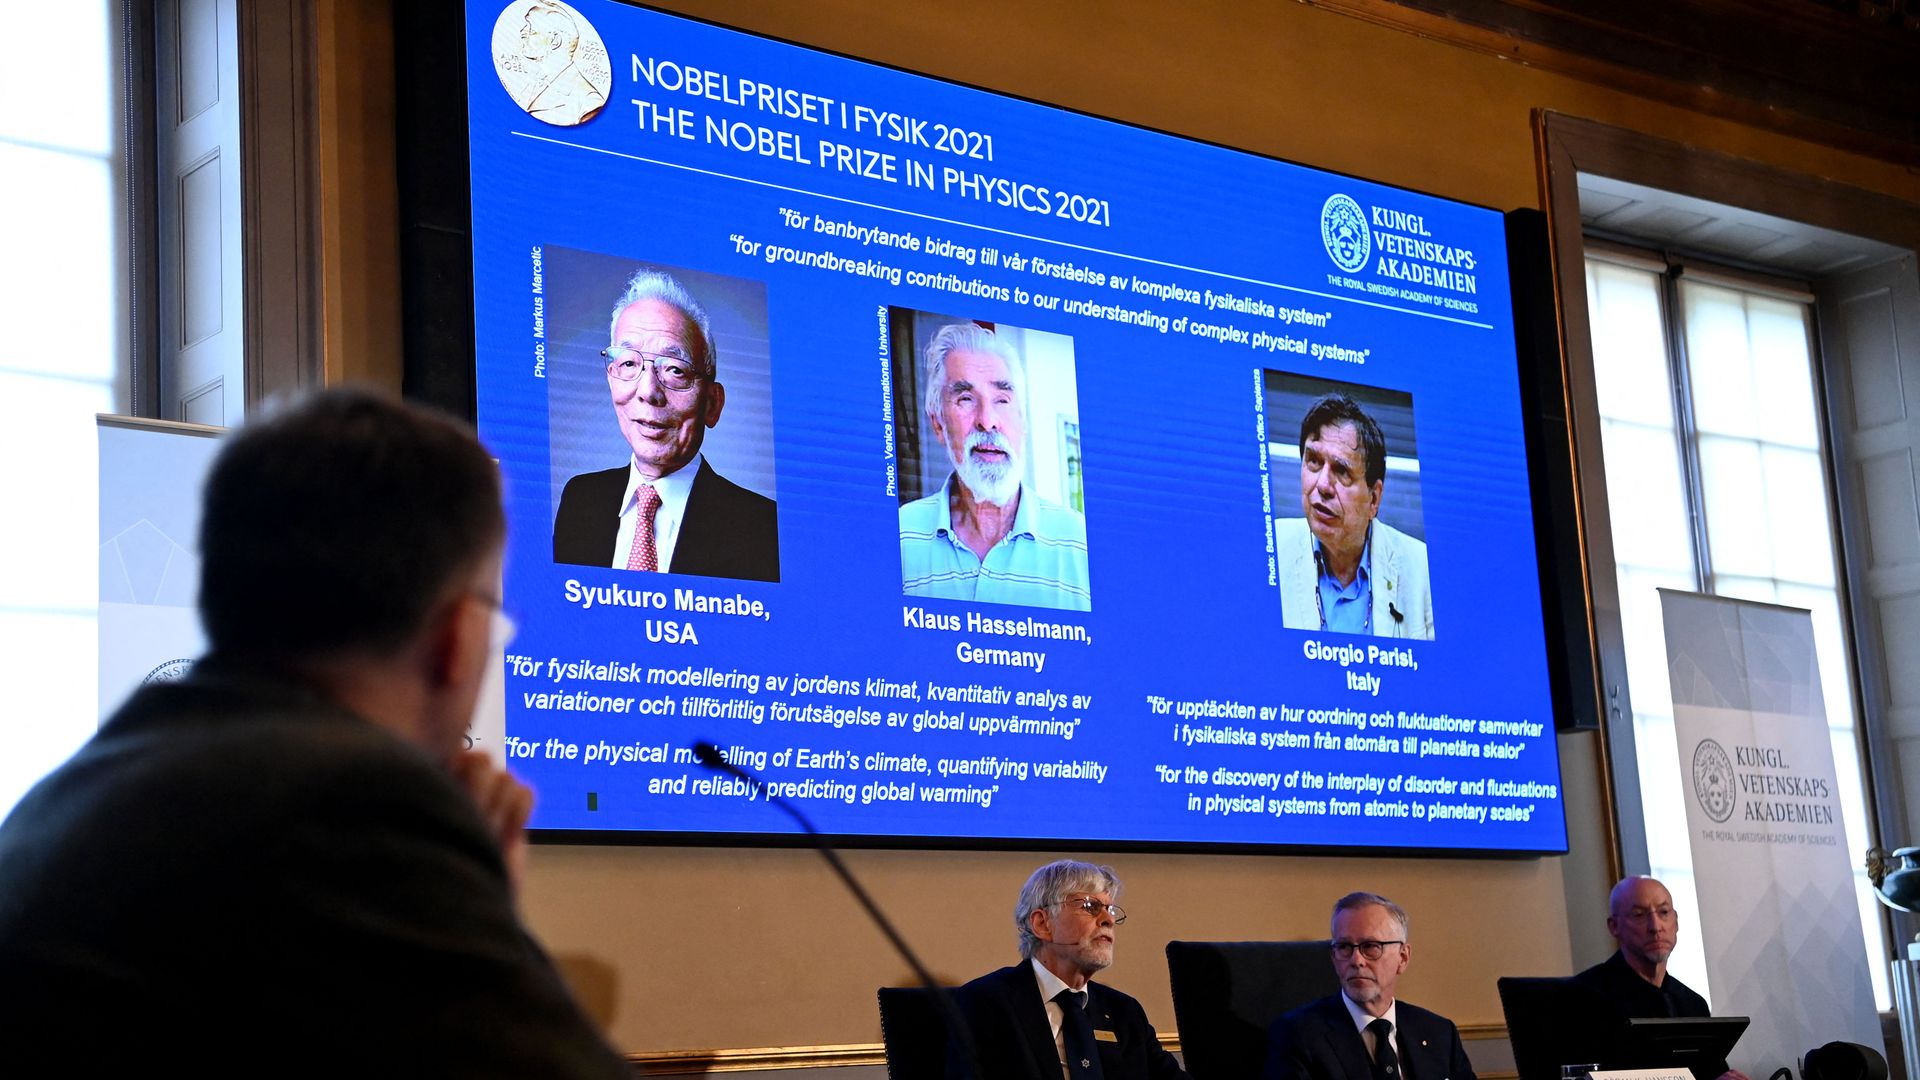 Syukuro Manabe, Klaus Hasselmann and Giorgio Parisi were awarded the Nobel Prize in Physics.